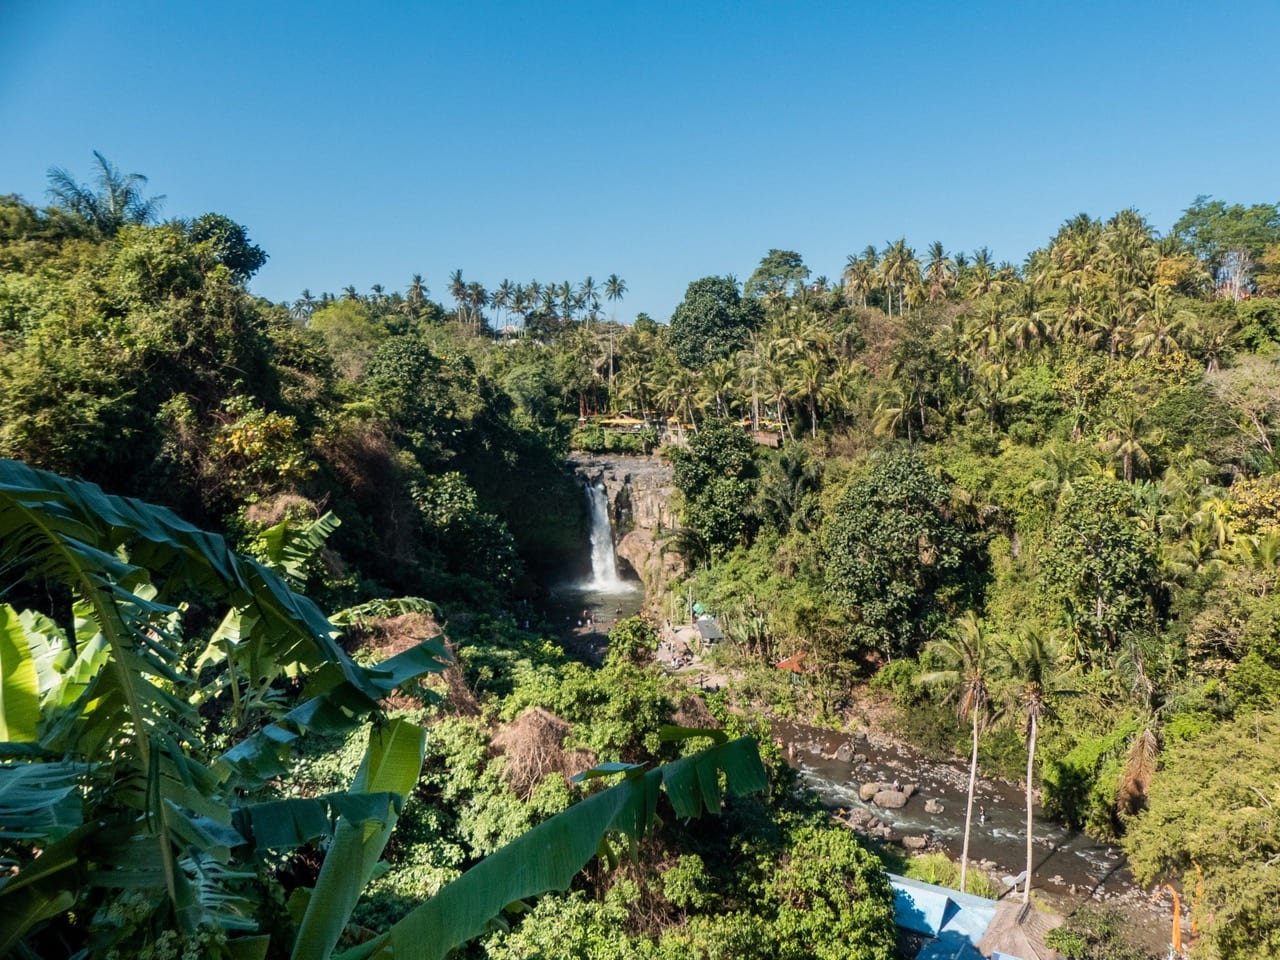 A guide to all the best waterfalls in Ubud Bali - Tegenungan Waterfall